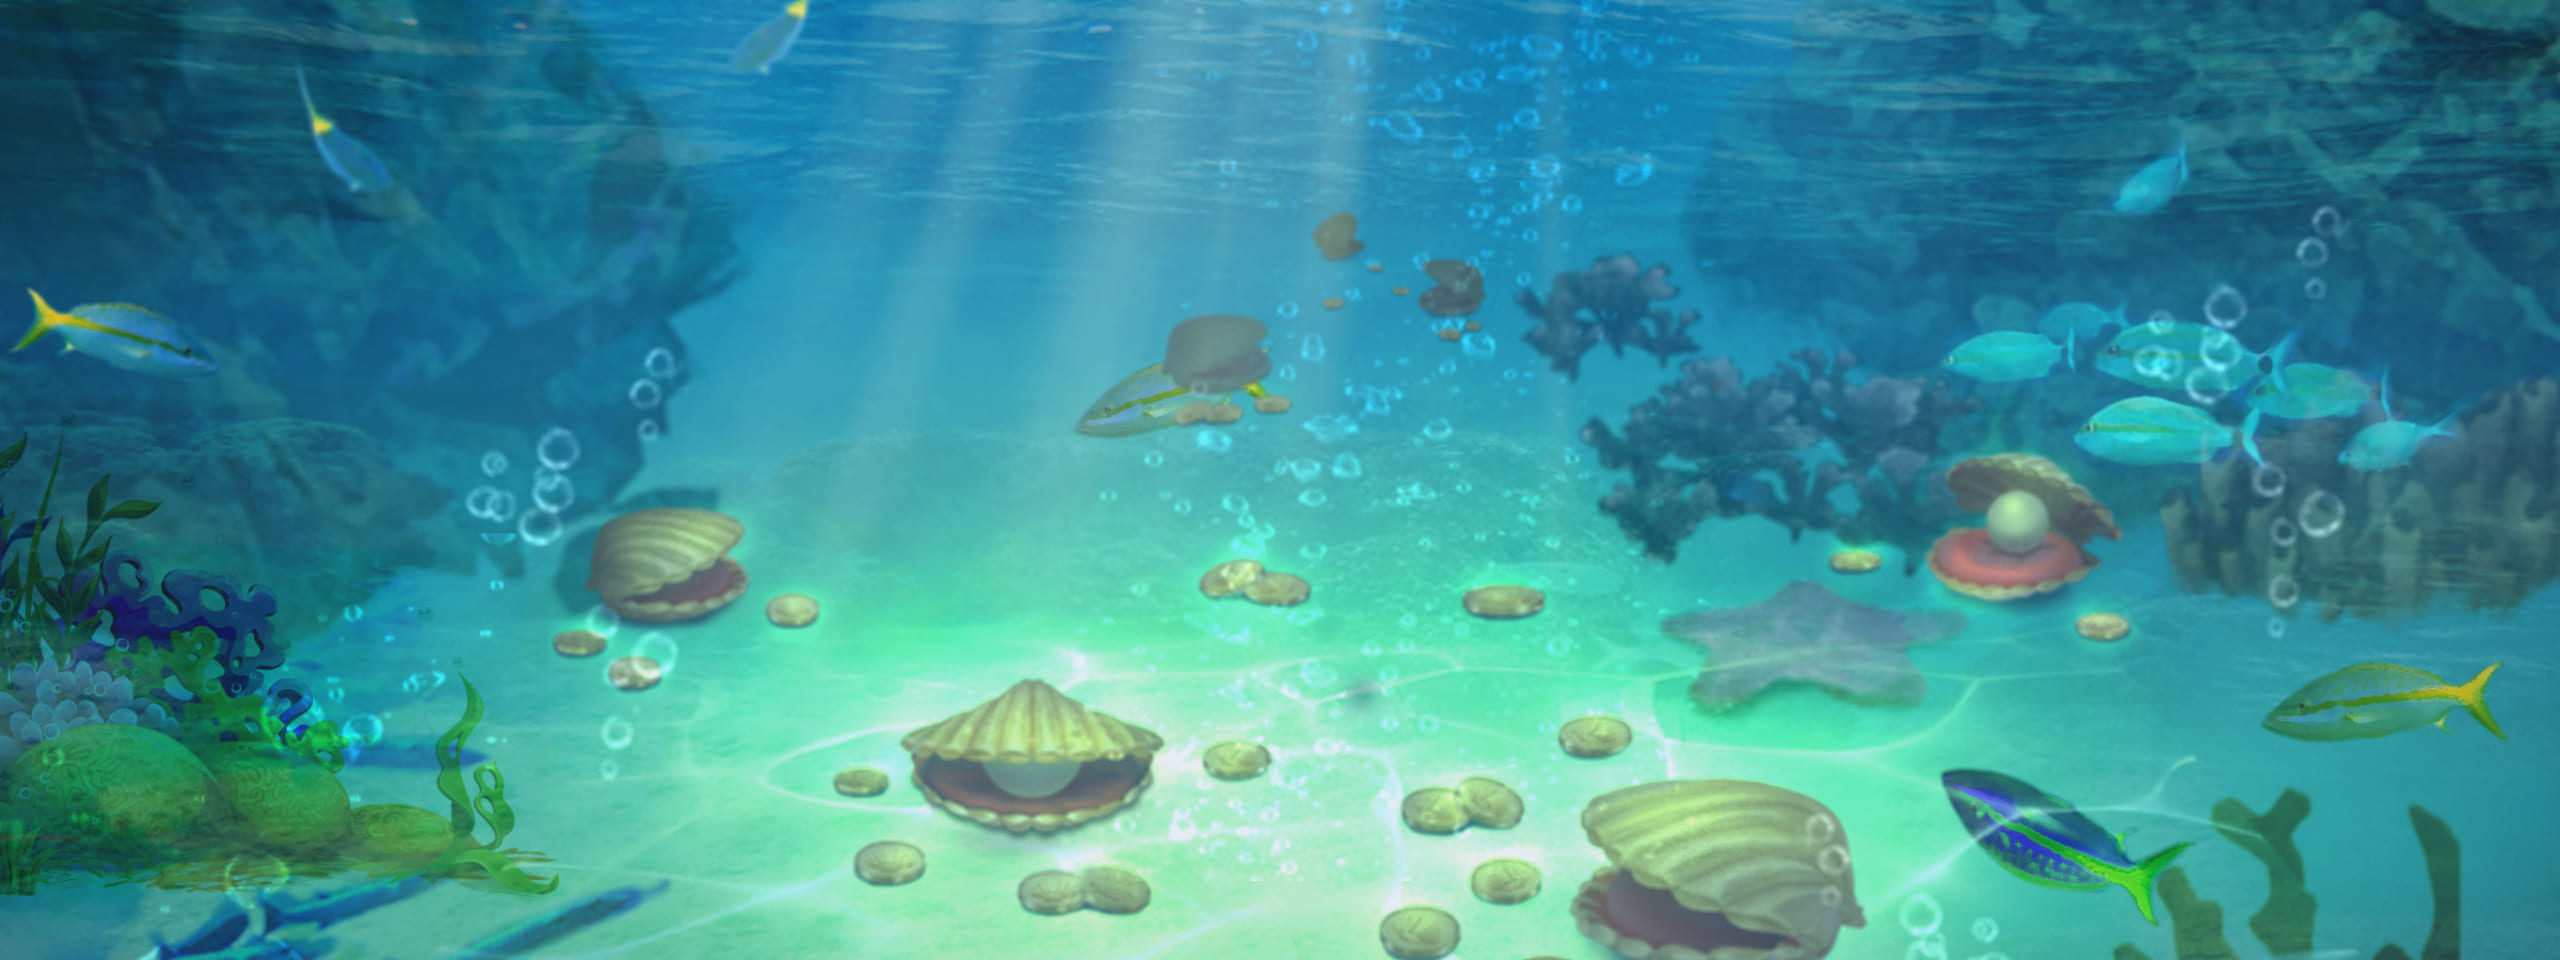 Mermaid's Treasure's background